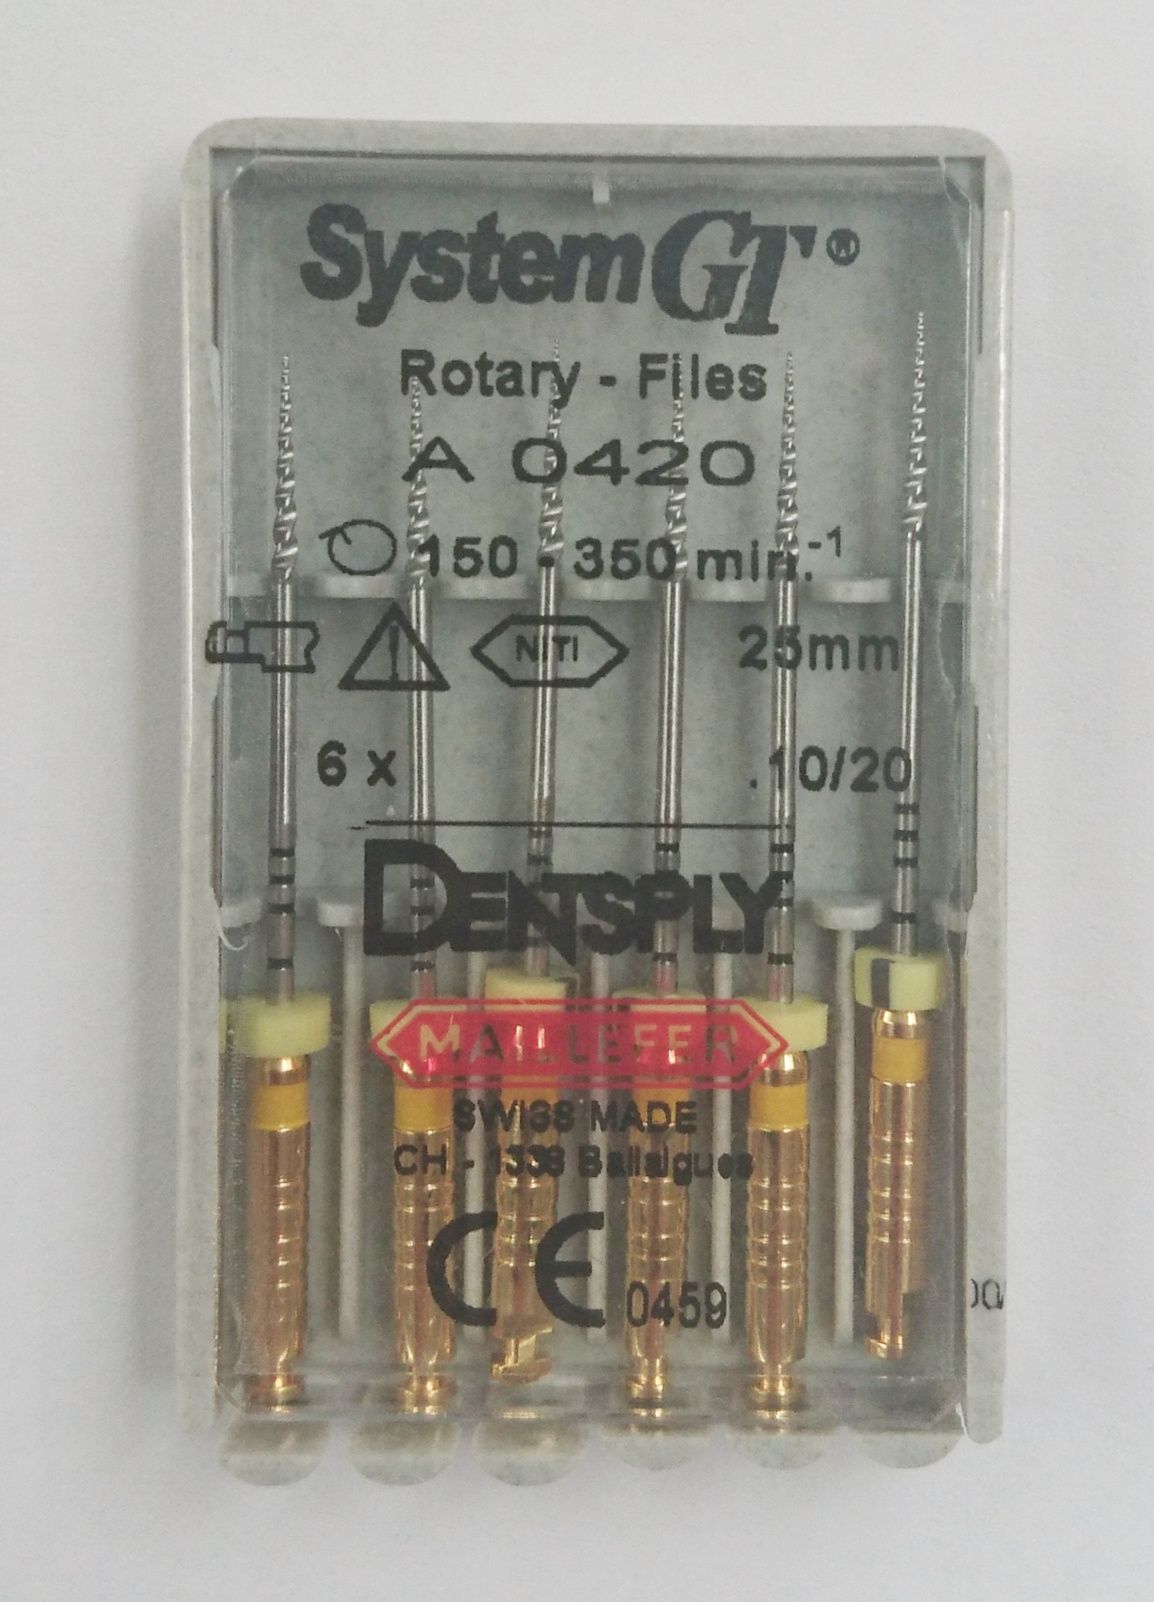 SystemGT 25mm 10/20